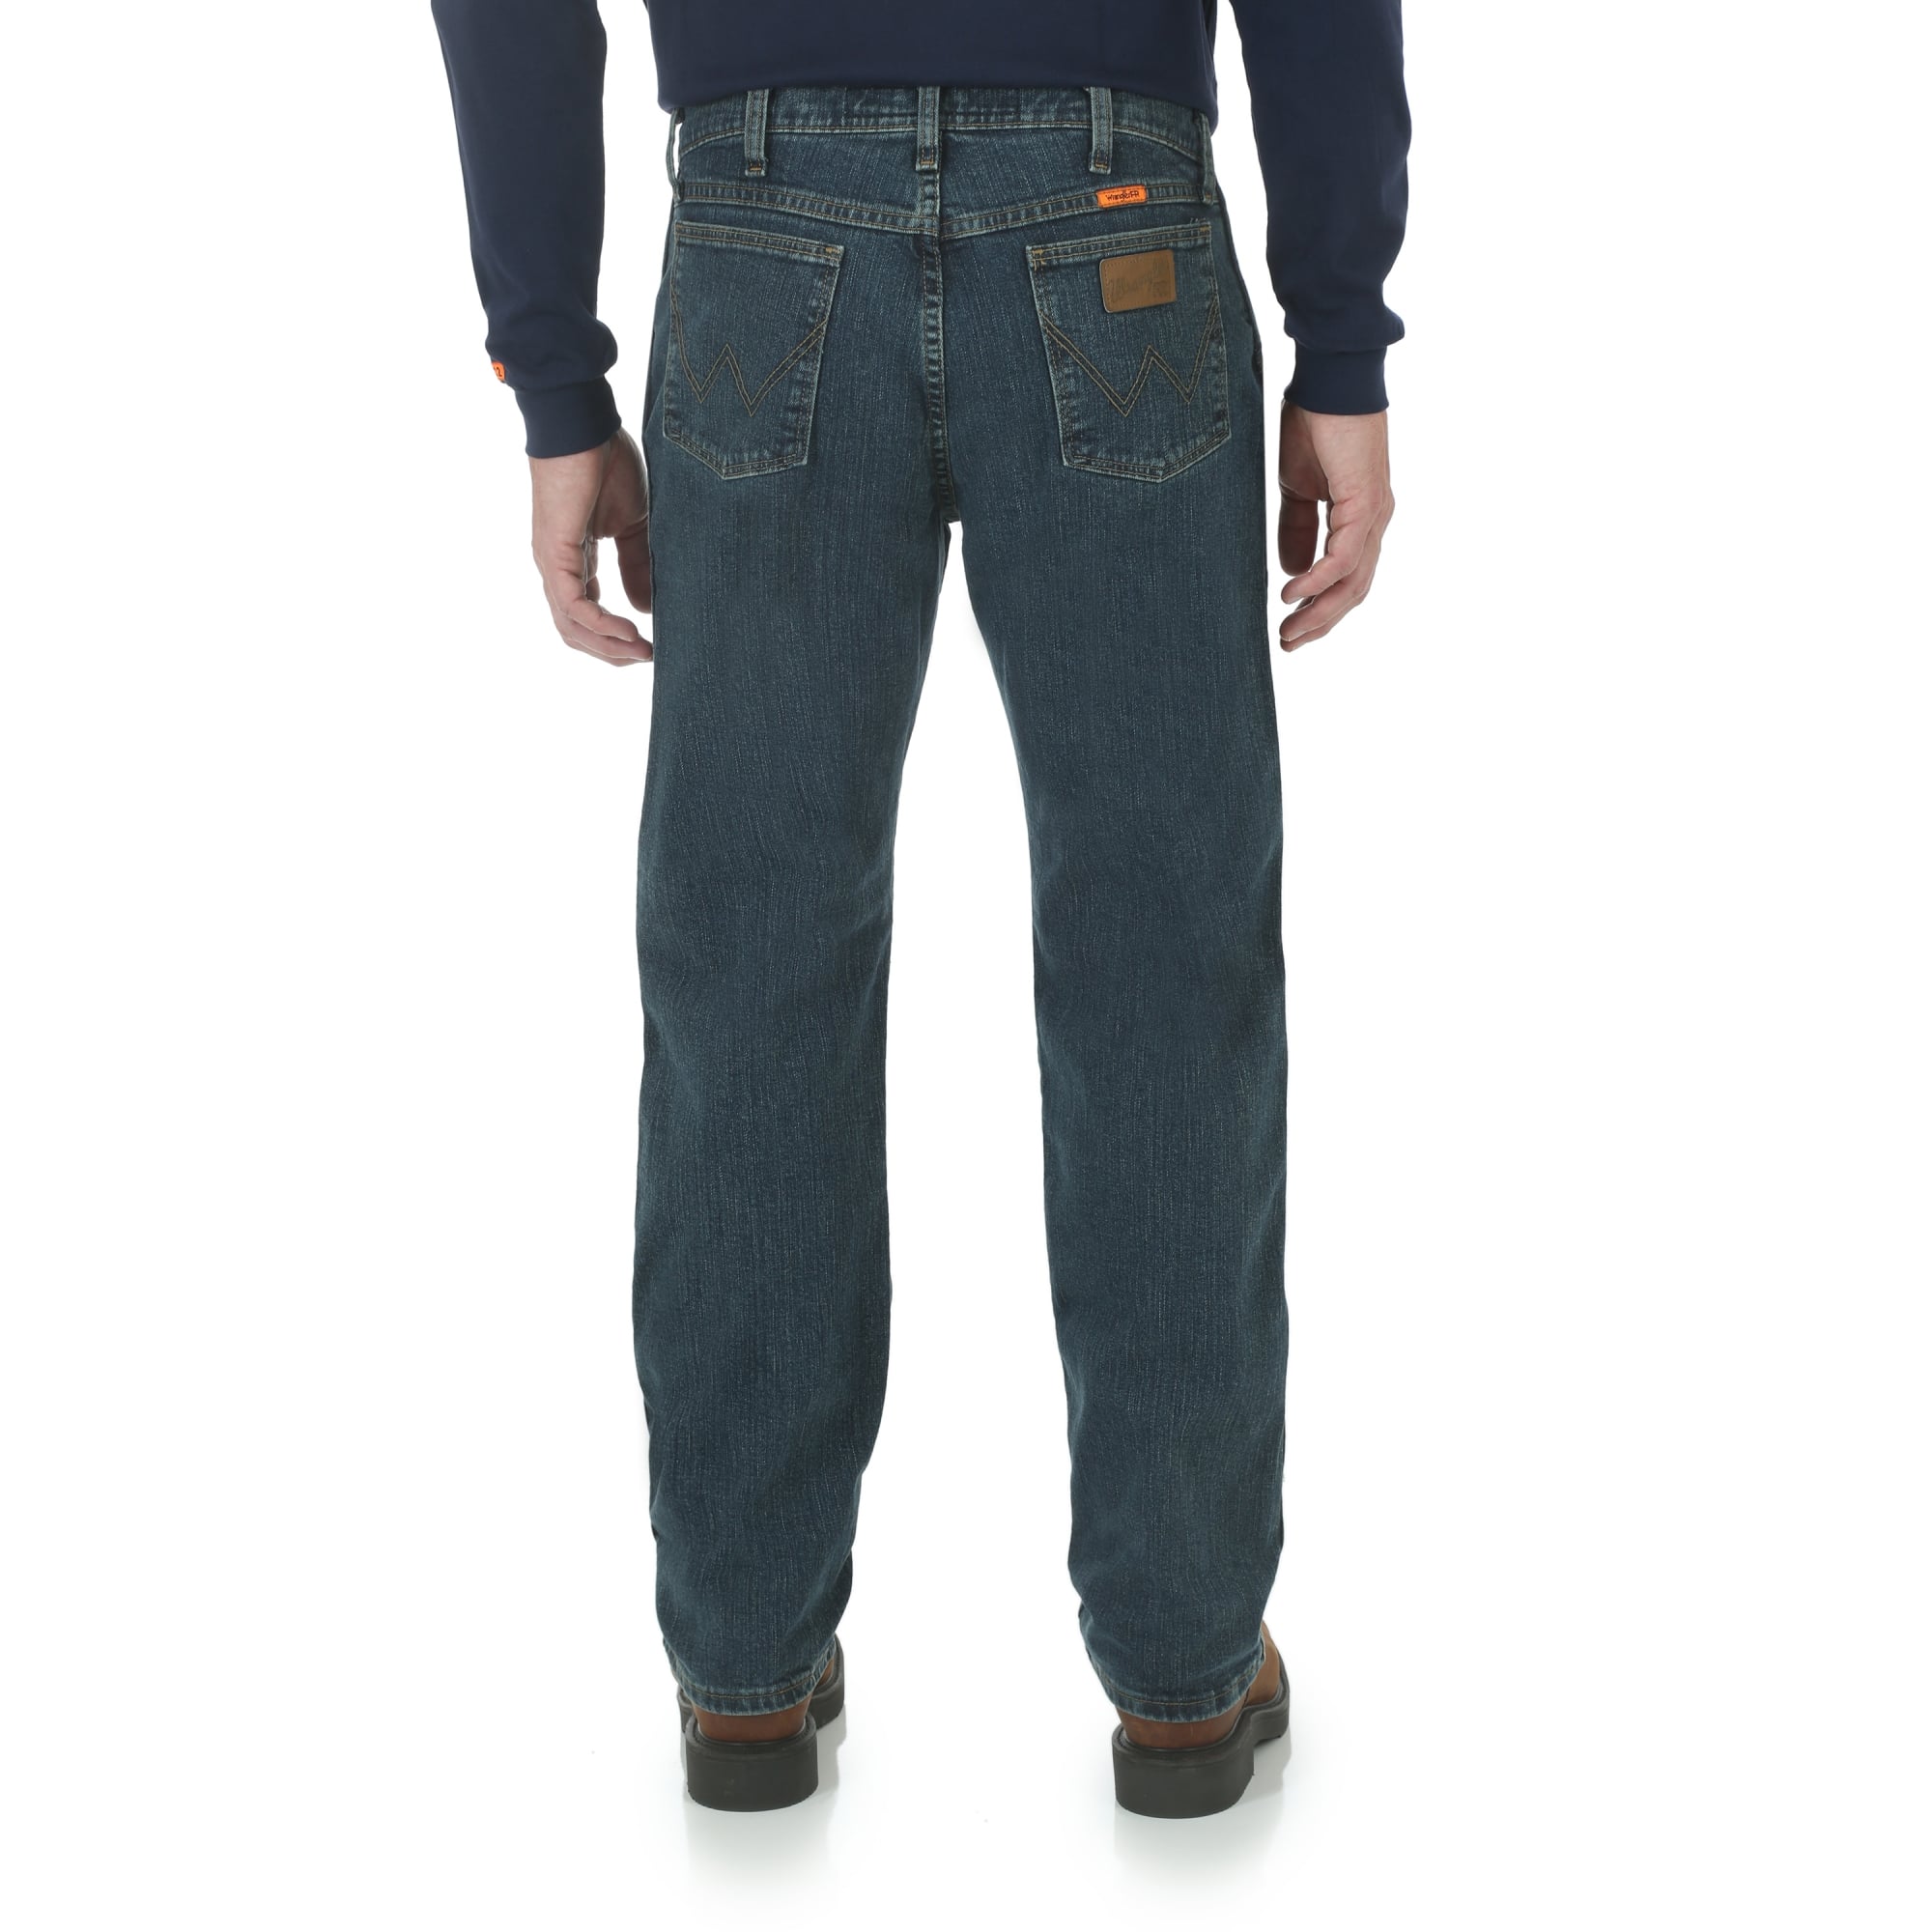 wrangler comfort jeans